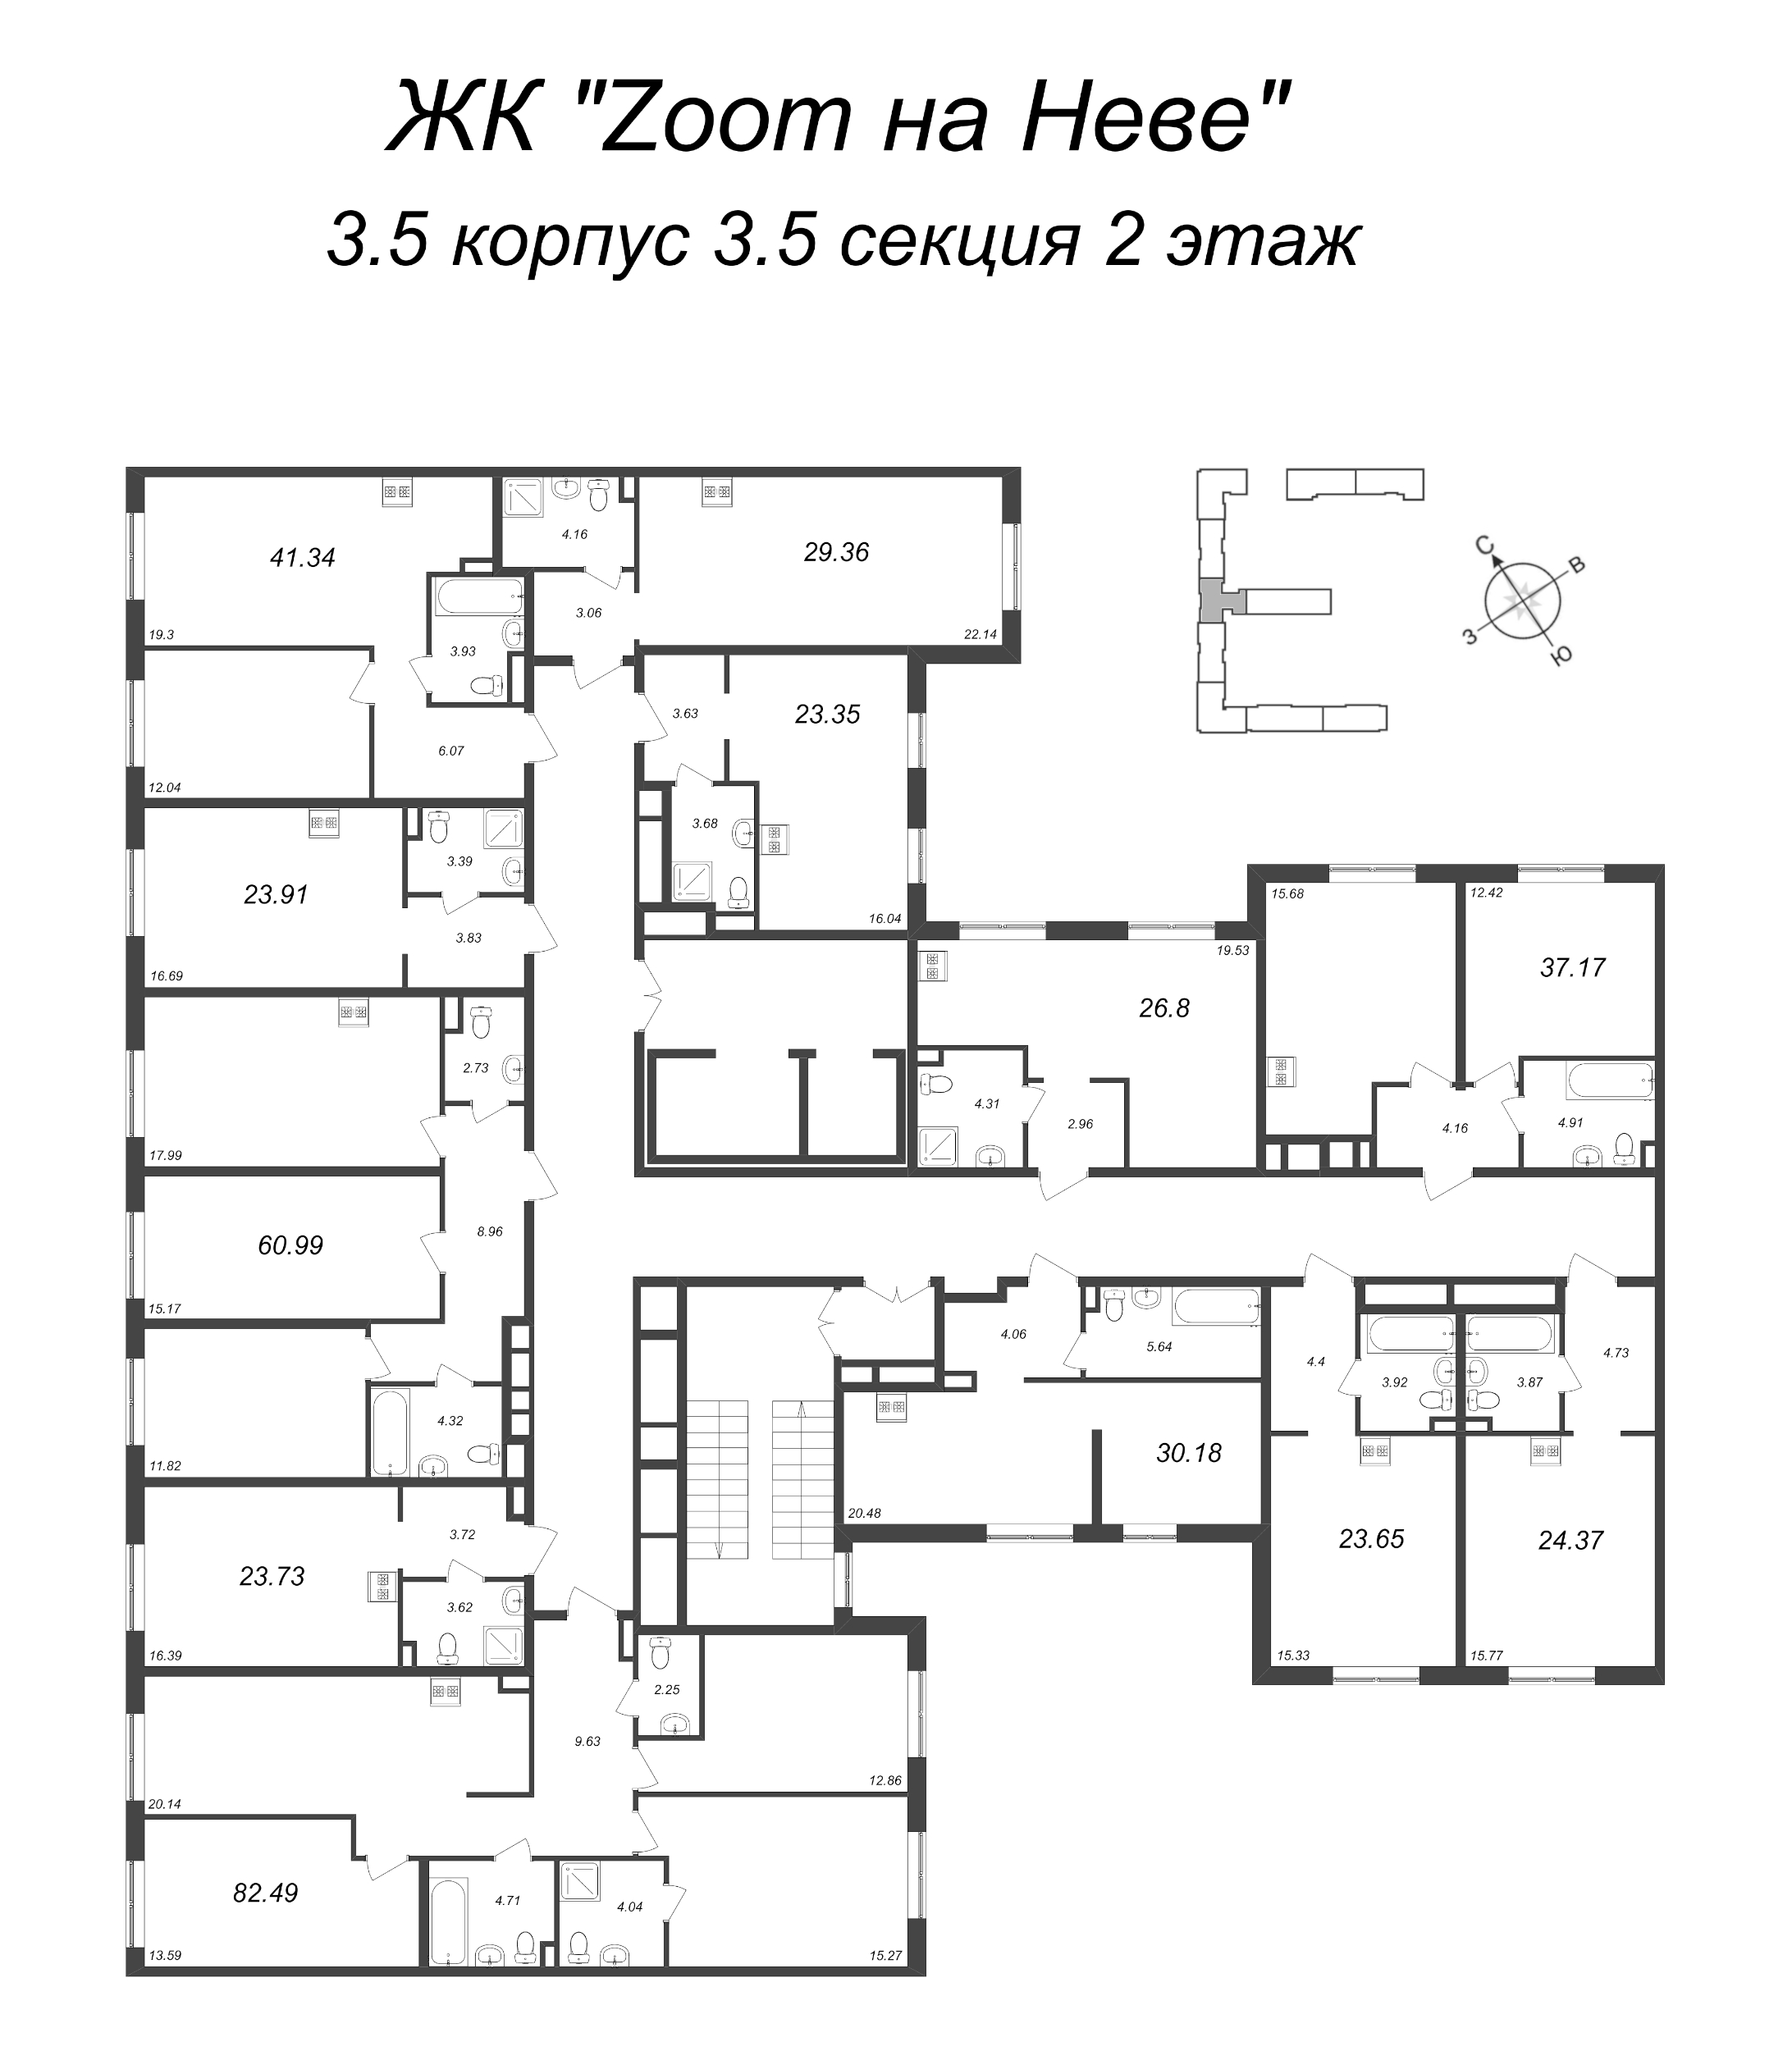 4-комнатная (Евро) квартира, 82.49 м² в ЖК "Zoom на Неве" - планировка этажа